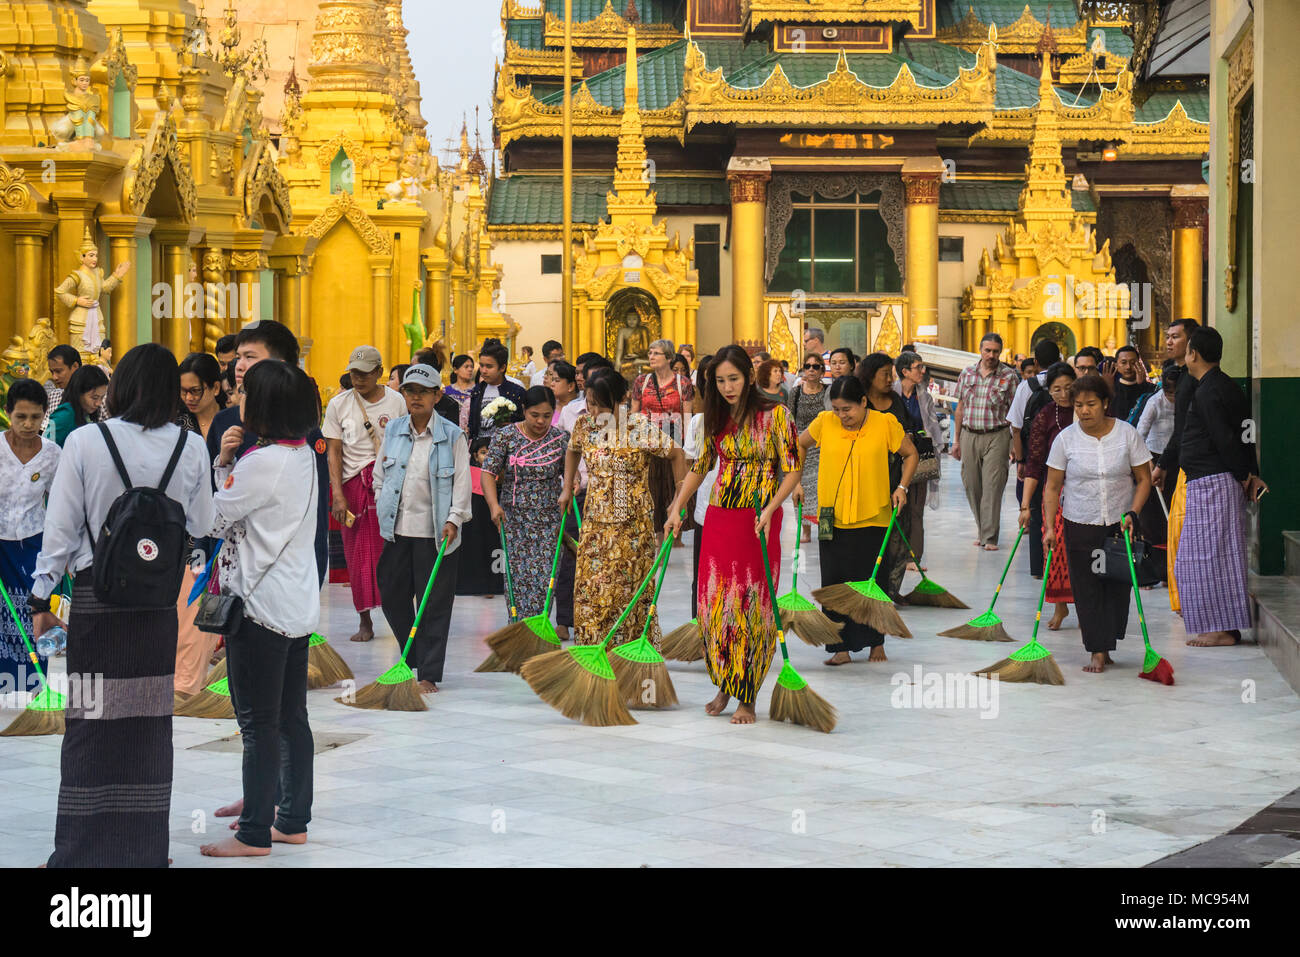 Kehrmaschinen sweep Stock mit Besen an der Shwedagon Pagode (Tempel) in Yangon, Myanmar, Asien Stockfoto